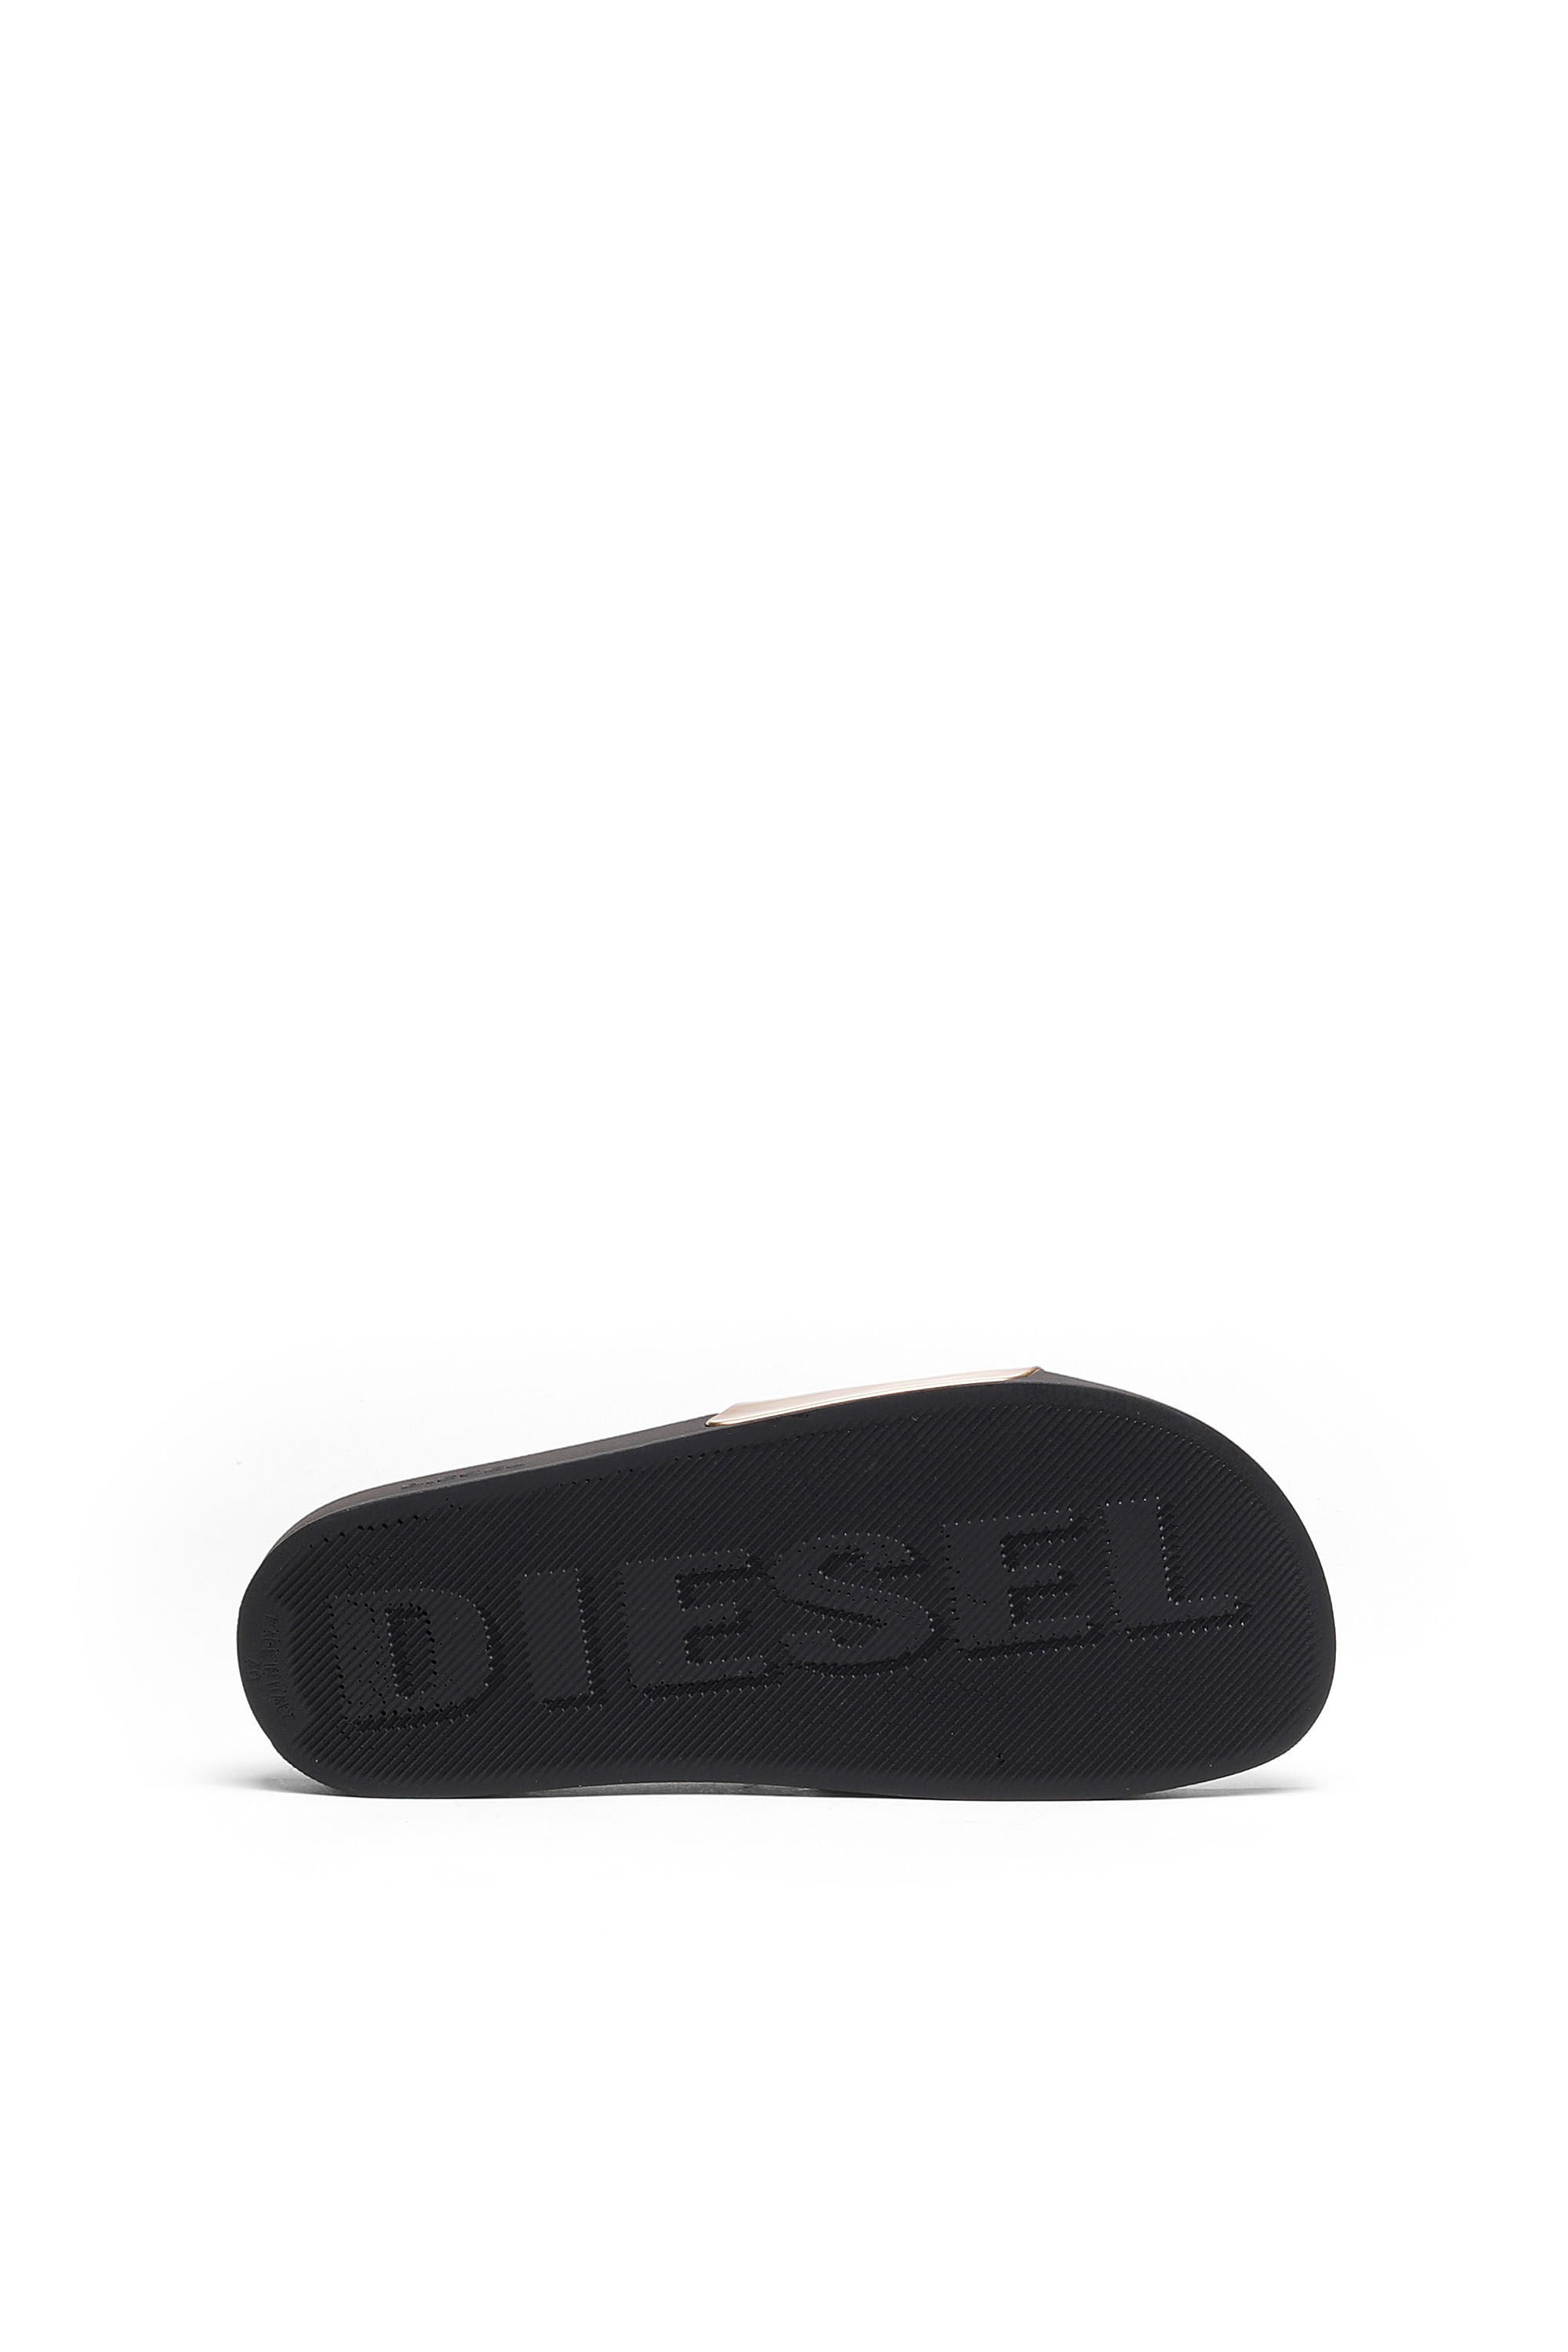 Diesel - SA-MAYEMI W, Black/Gold - Image 4